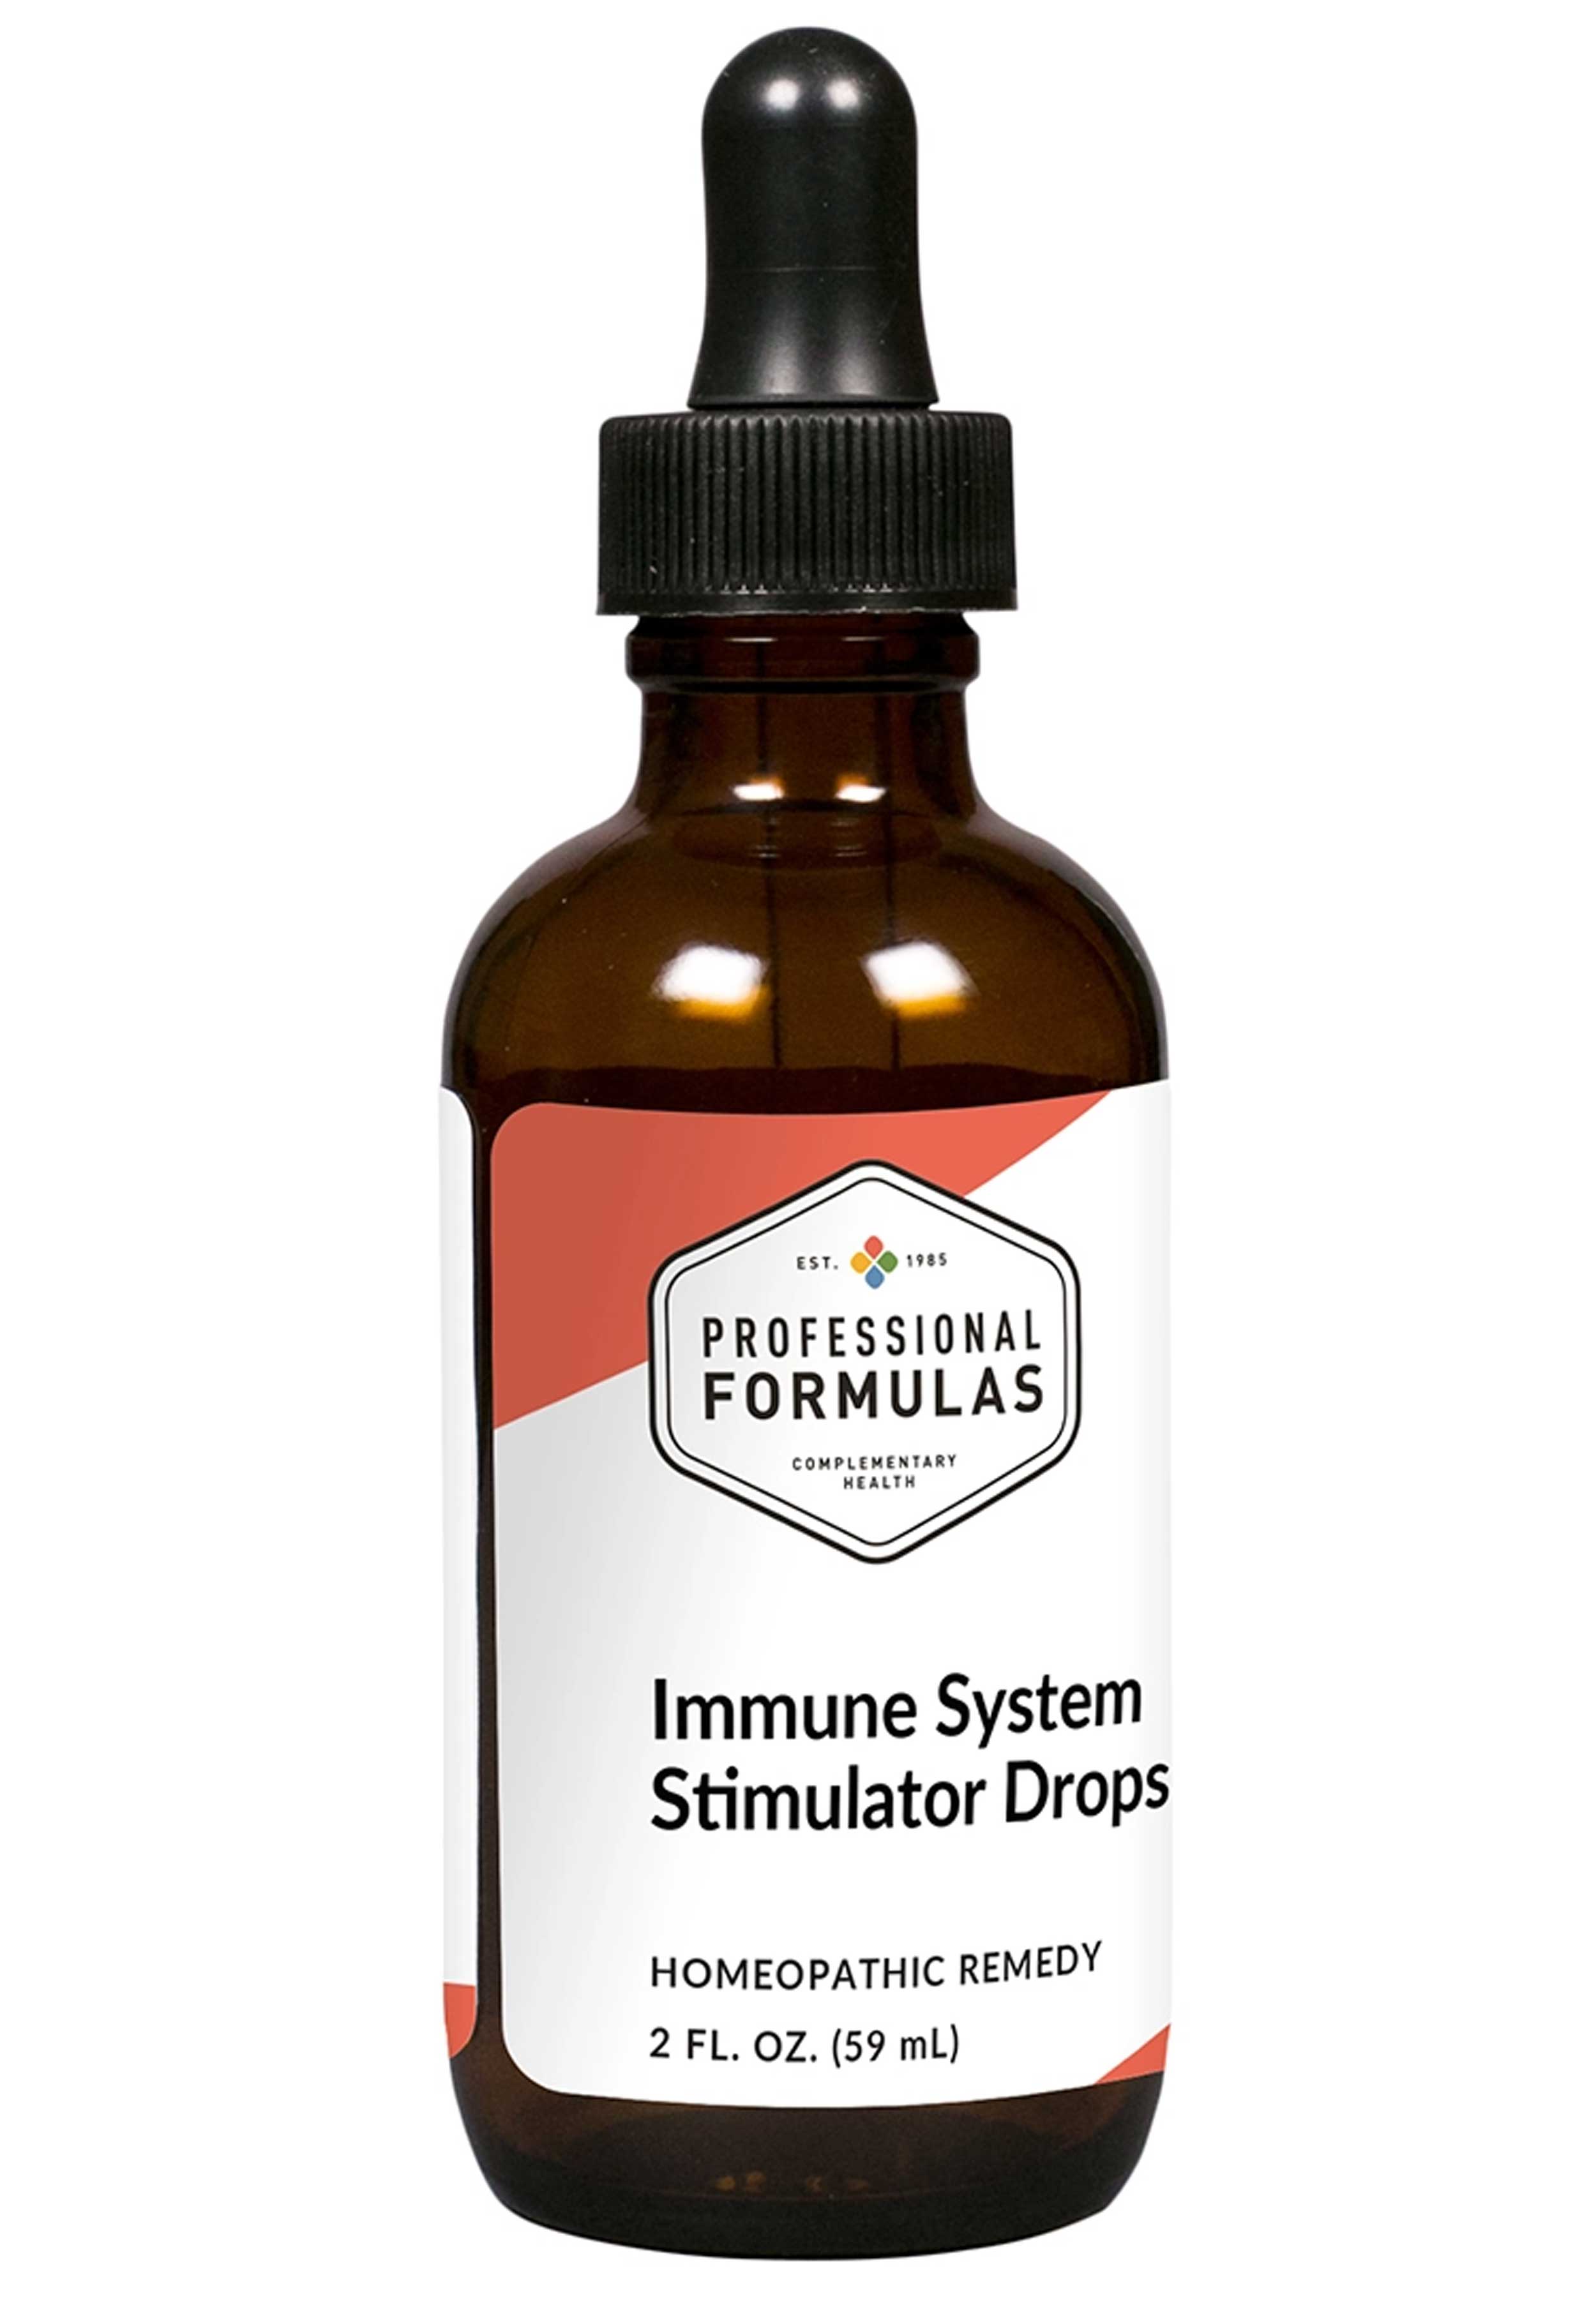 Professional Formulas Immune System Stimulator Drops